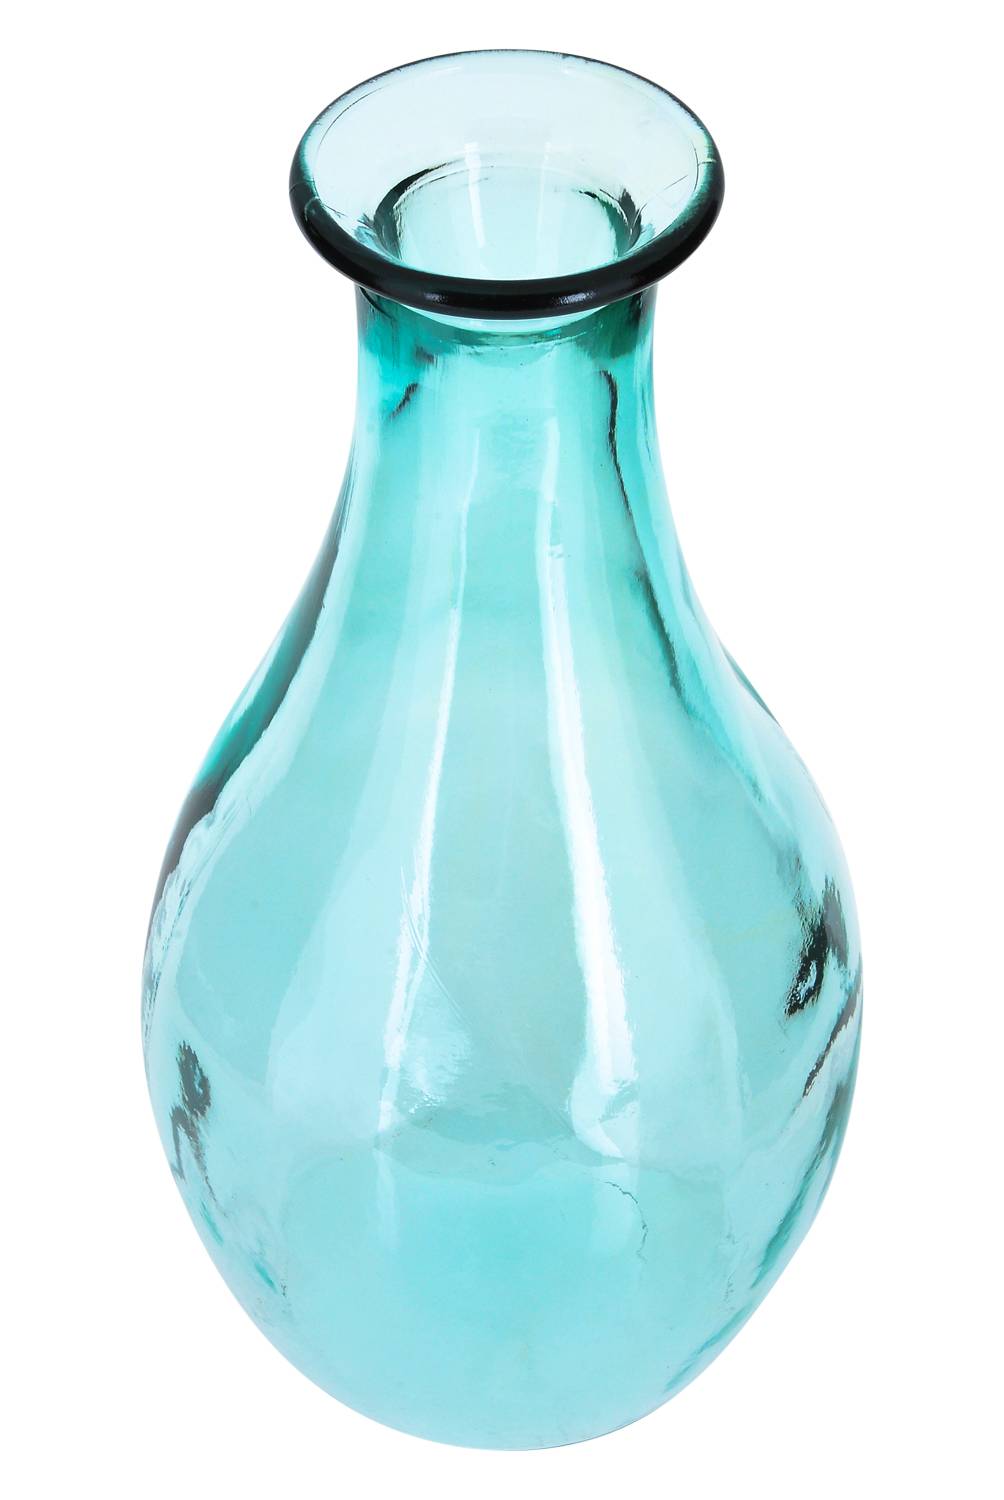 SAN MIGUEL - Florero botella lisboa 40 cm